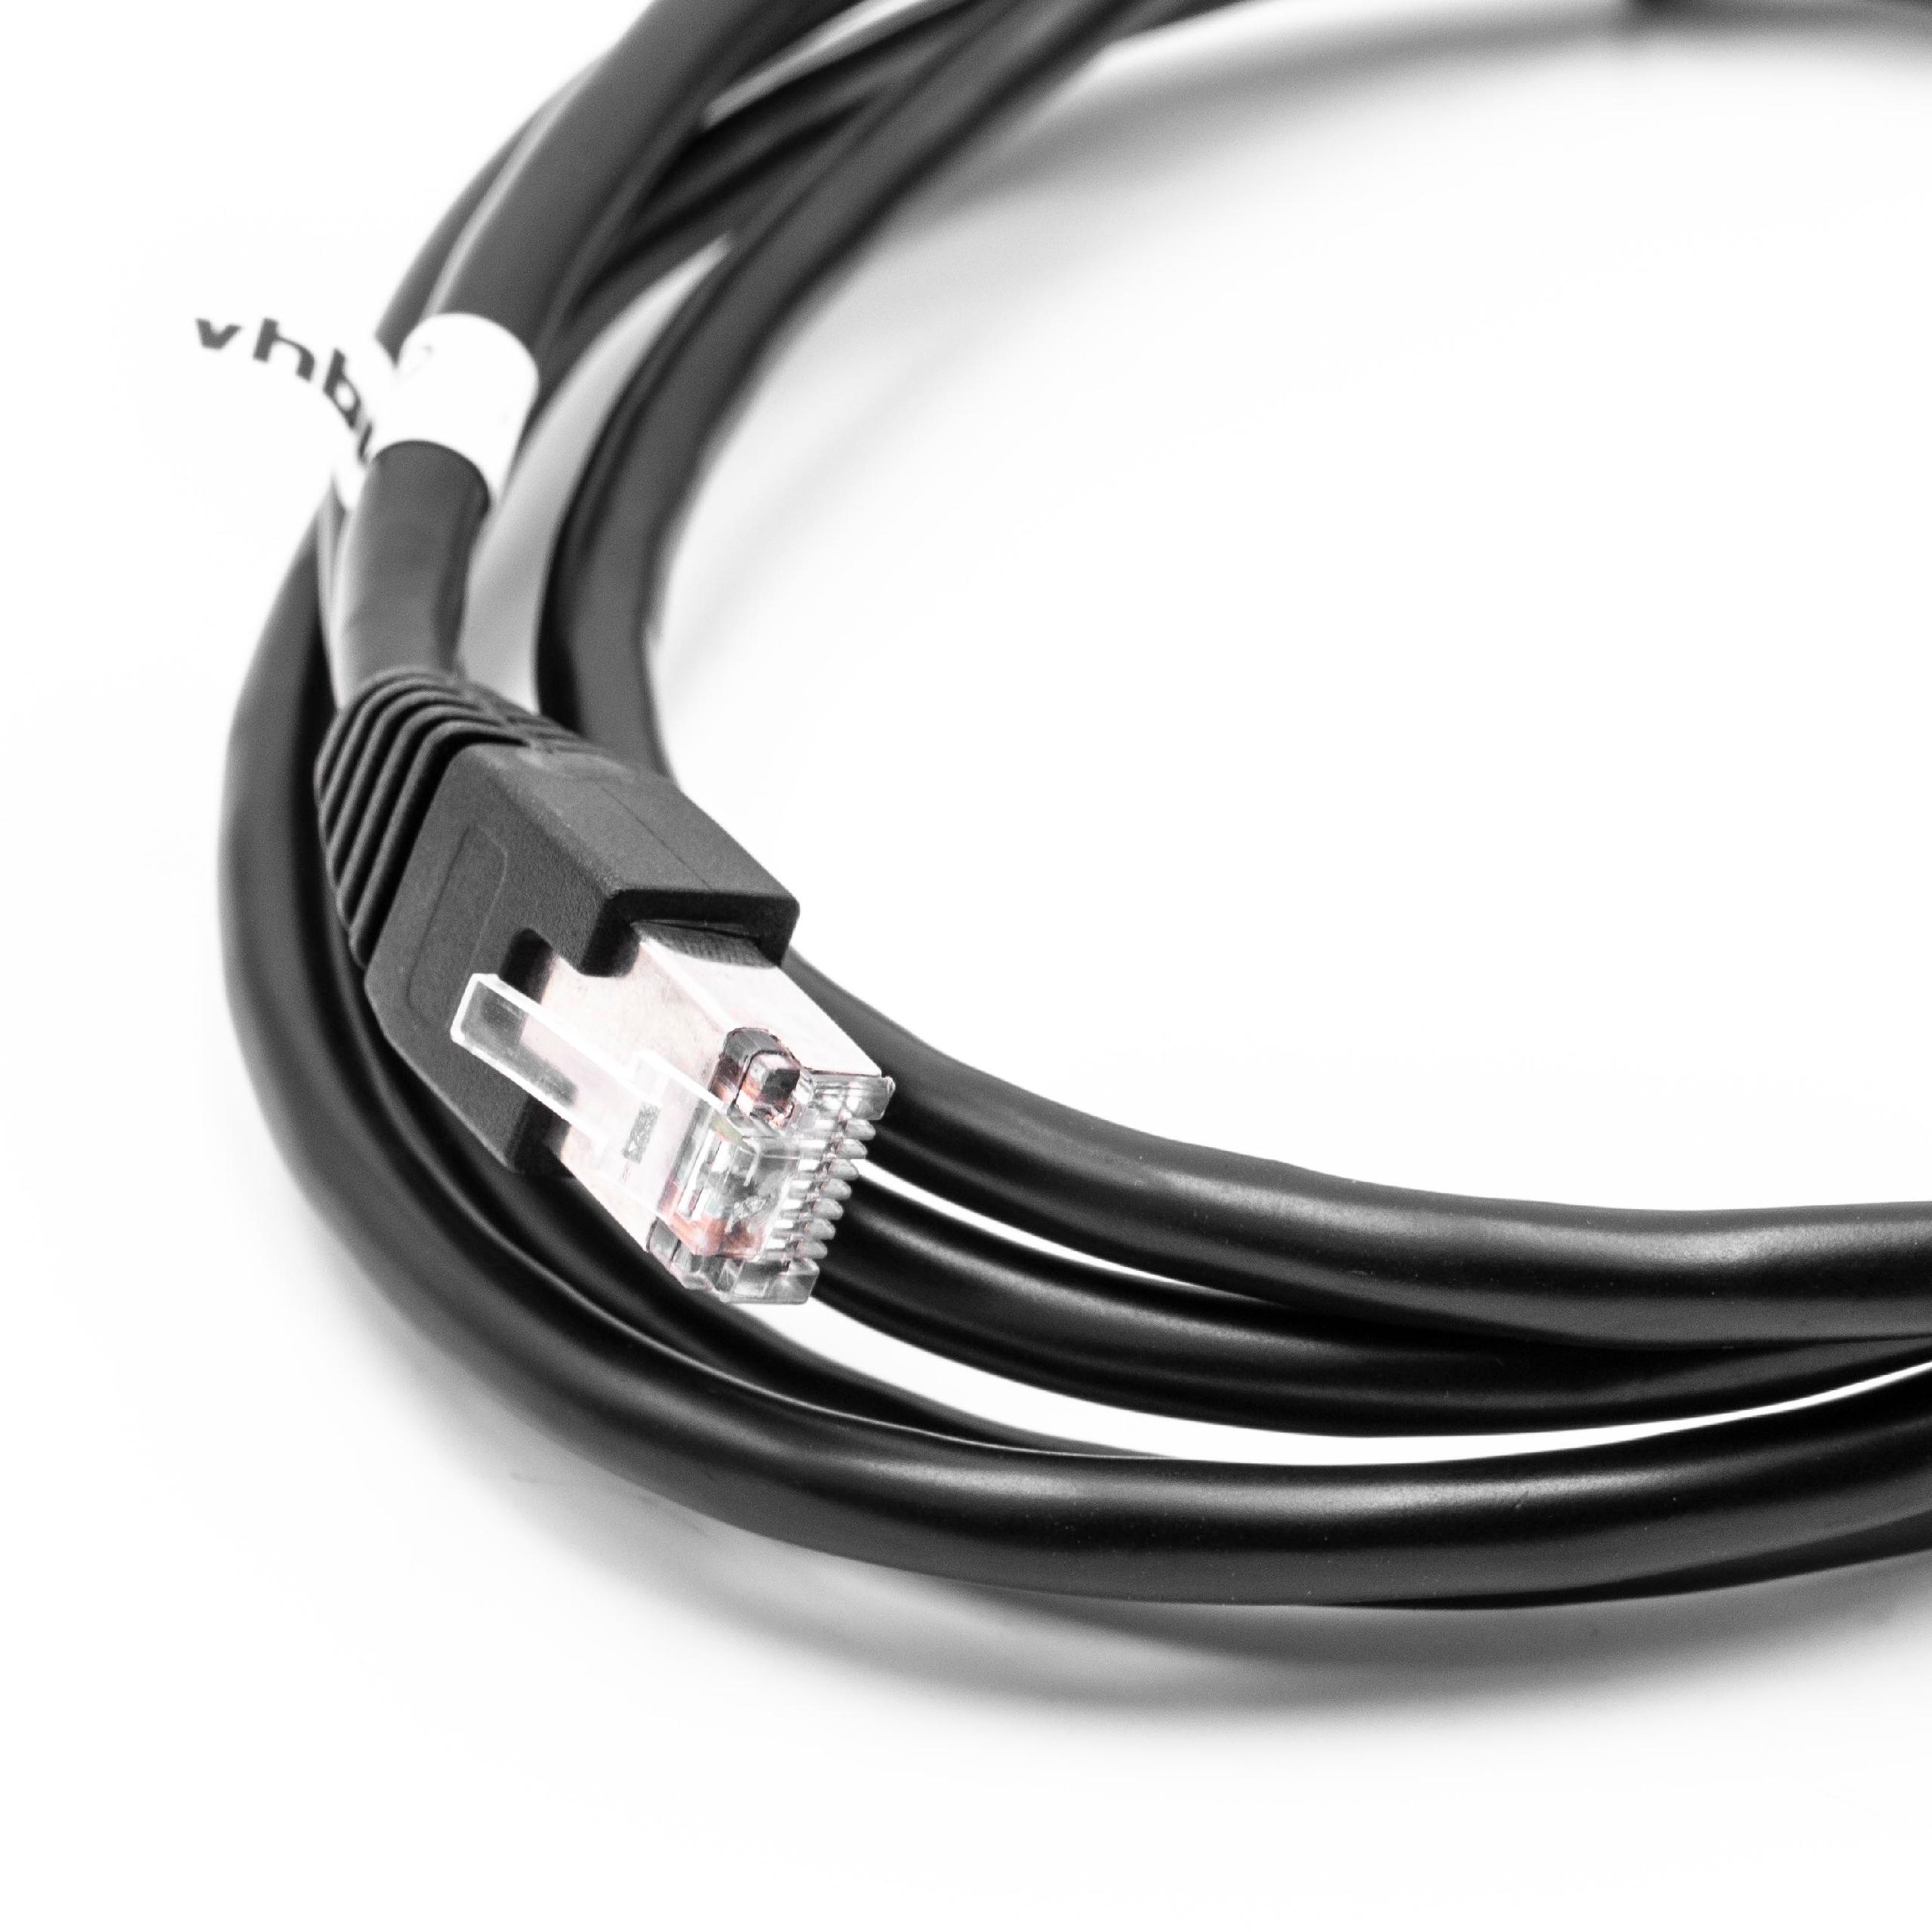 Câble de rallonge Cat6 RJ45 mâle vers RJ45 femelle - Câble LAN Ethernet avec prise RJ45 encastrée, 2 m